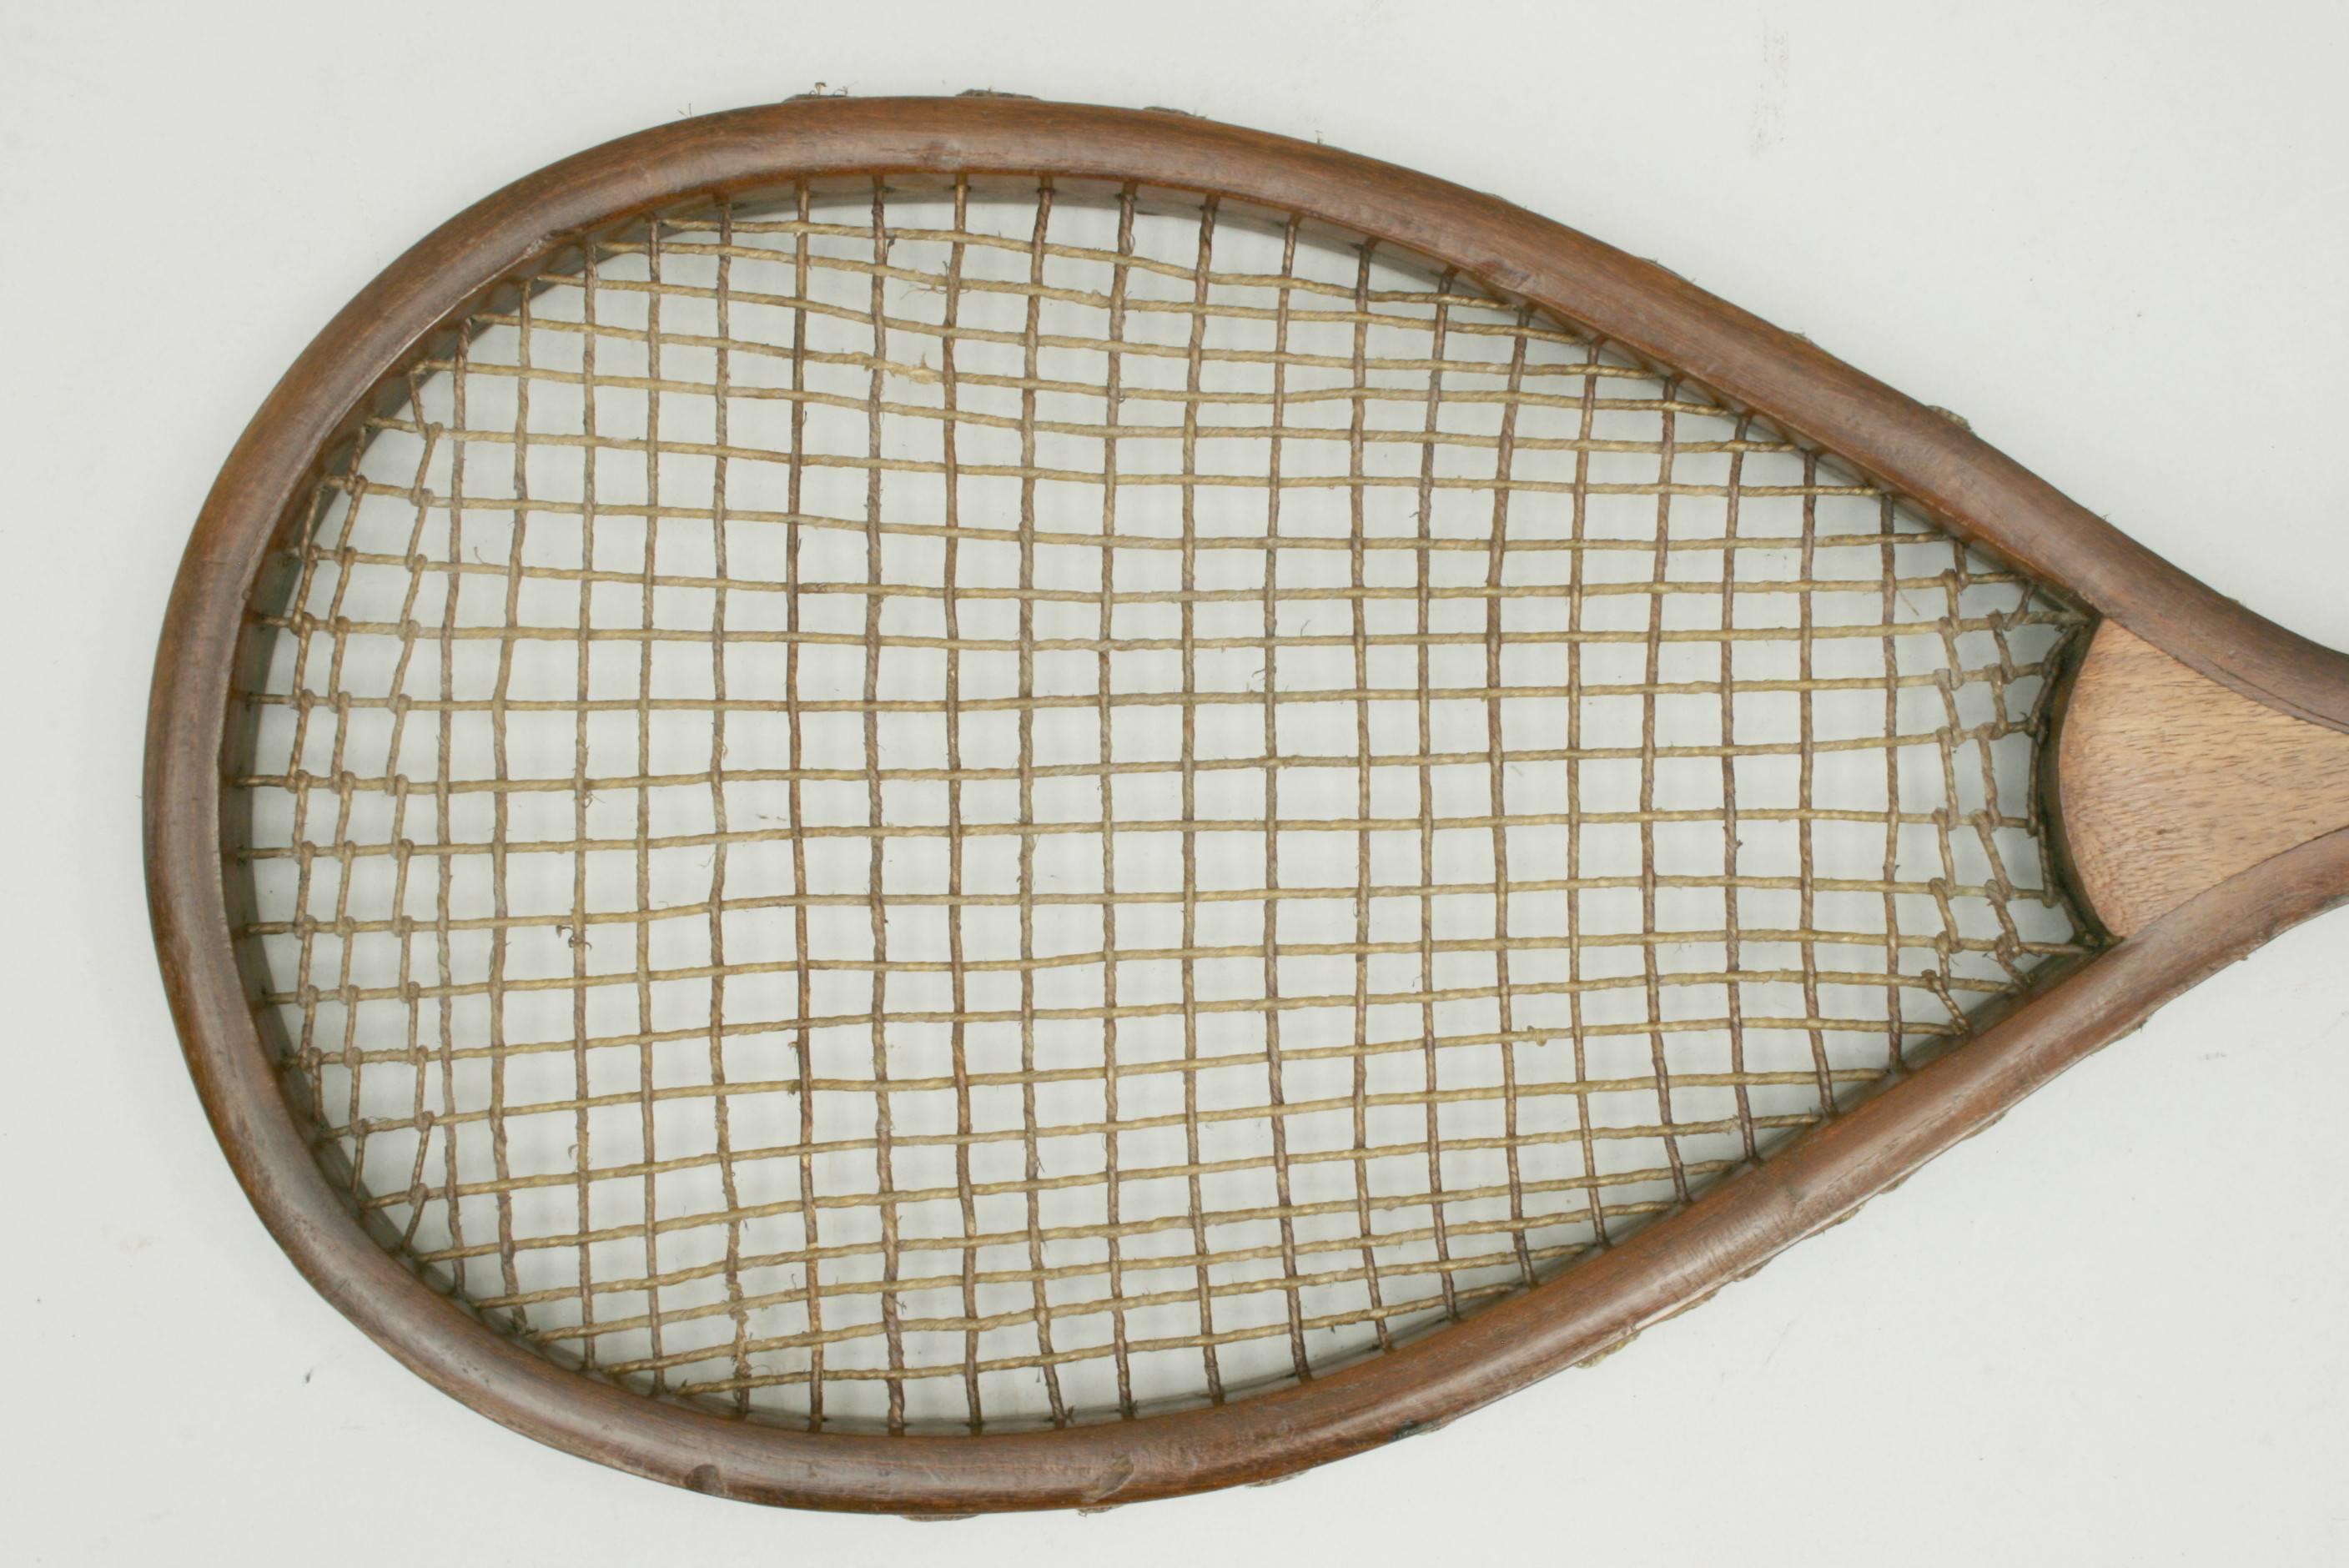 British Early Lawn Tennis Racket